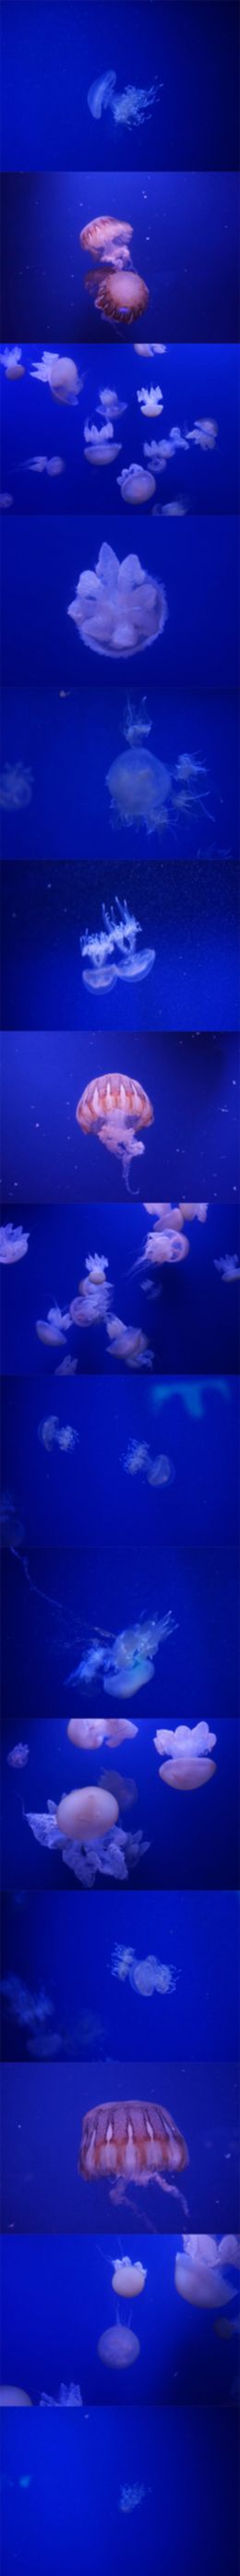 Fotografía, Jellyfish, Jenny Owens